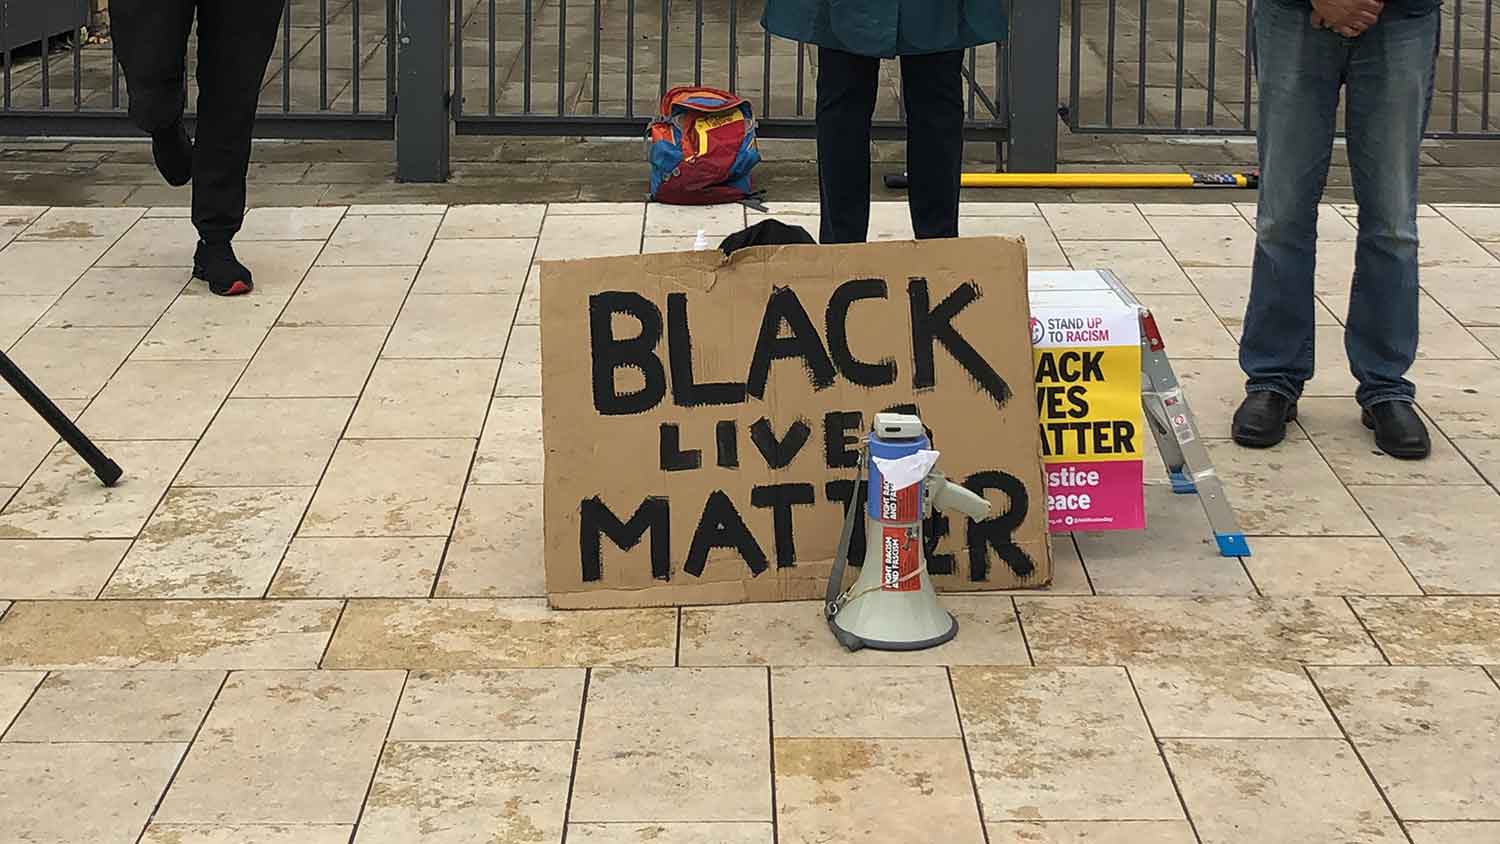 Black lives matter placard